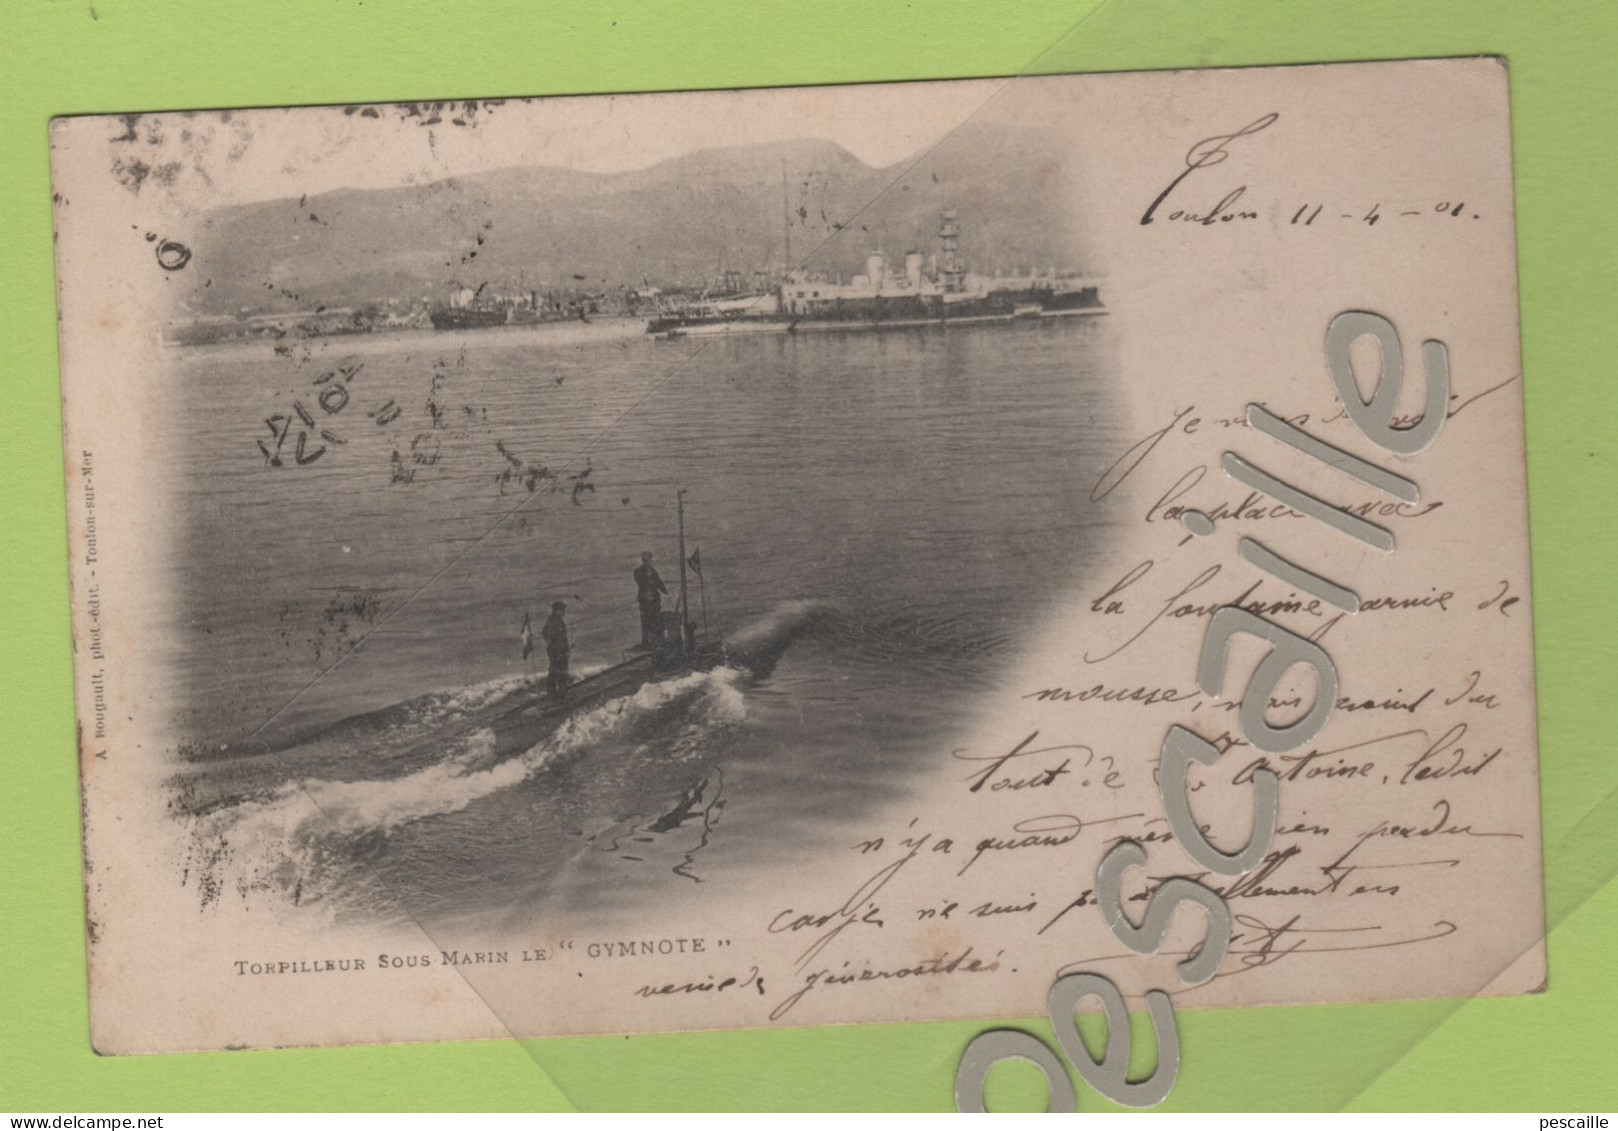 MILITARIA  - CP TORPILLEUR SOUS MARIN LE " GYMNOTE " - A. ROUGAULT PHOT EDIT TOULON SUR MER - CIRCULEE EN 1901 - Submarines